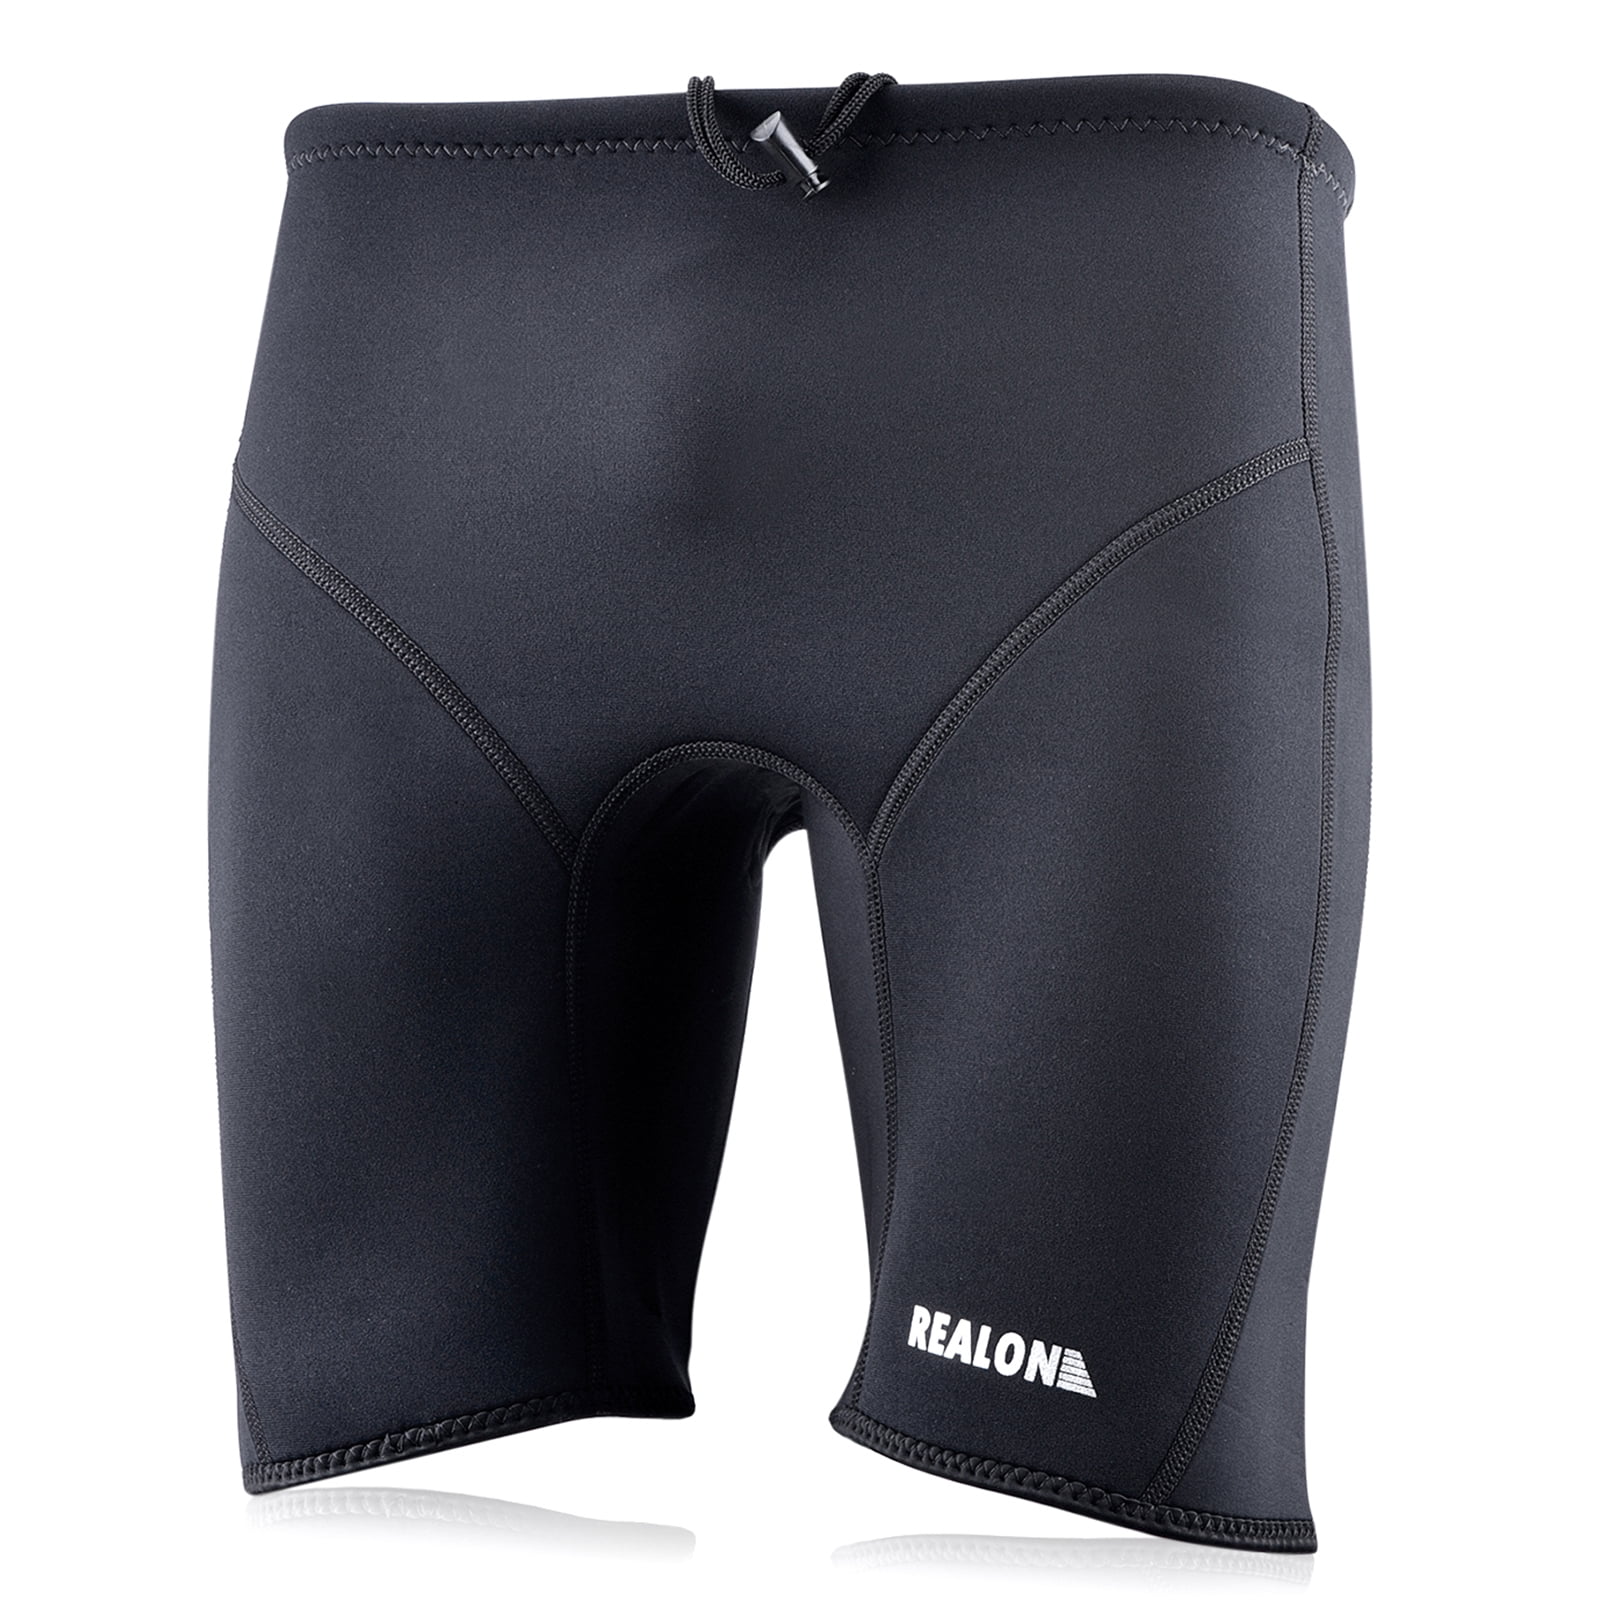 REALON Wetsuit Shorts Neoprene Men 3mm Buoyancy Swim Pants Adult